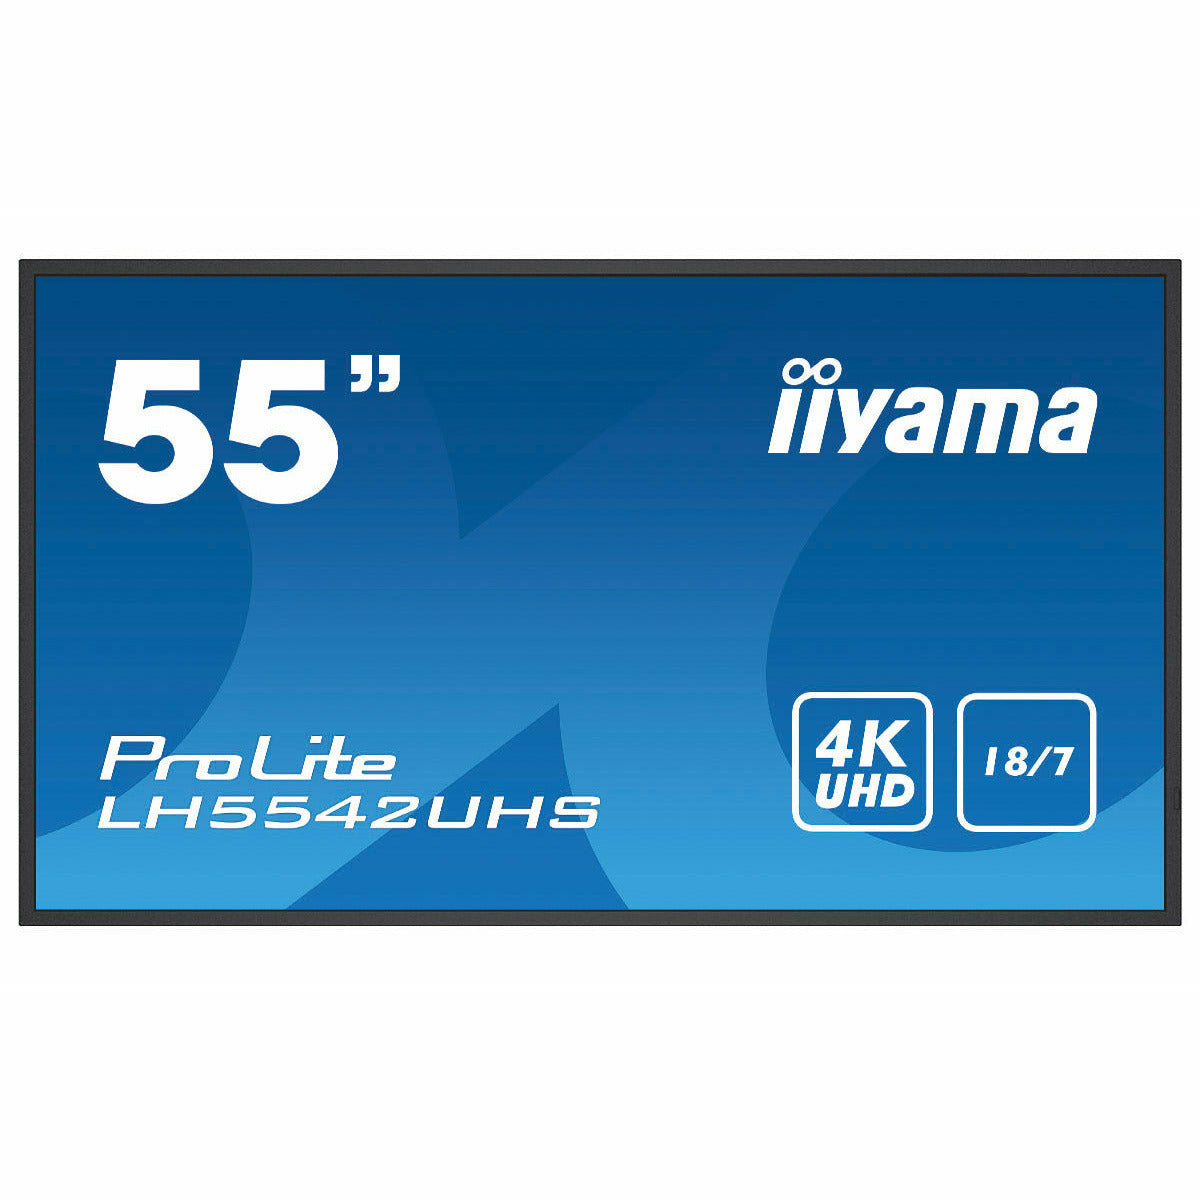 Dark Cyan iiyama ProLite LH5542UHS-B3 55" IPS 4K LFD 18/7 with Android 8.0 and iiyama N-sign integrated Signage Platform